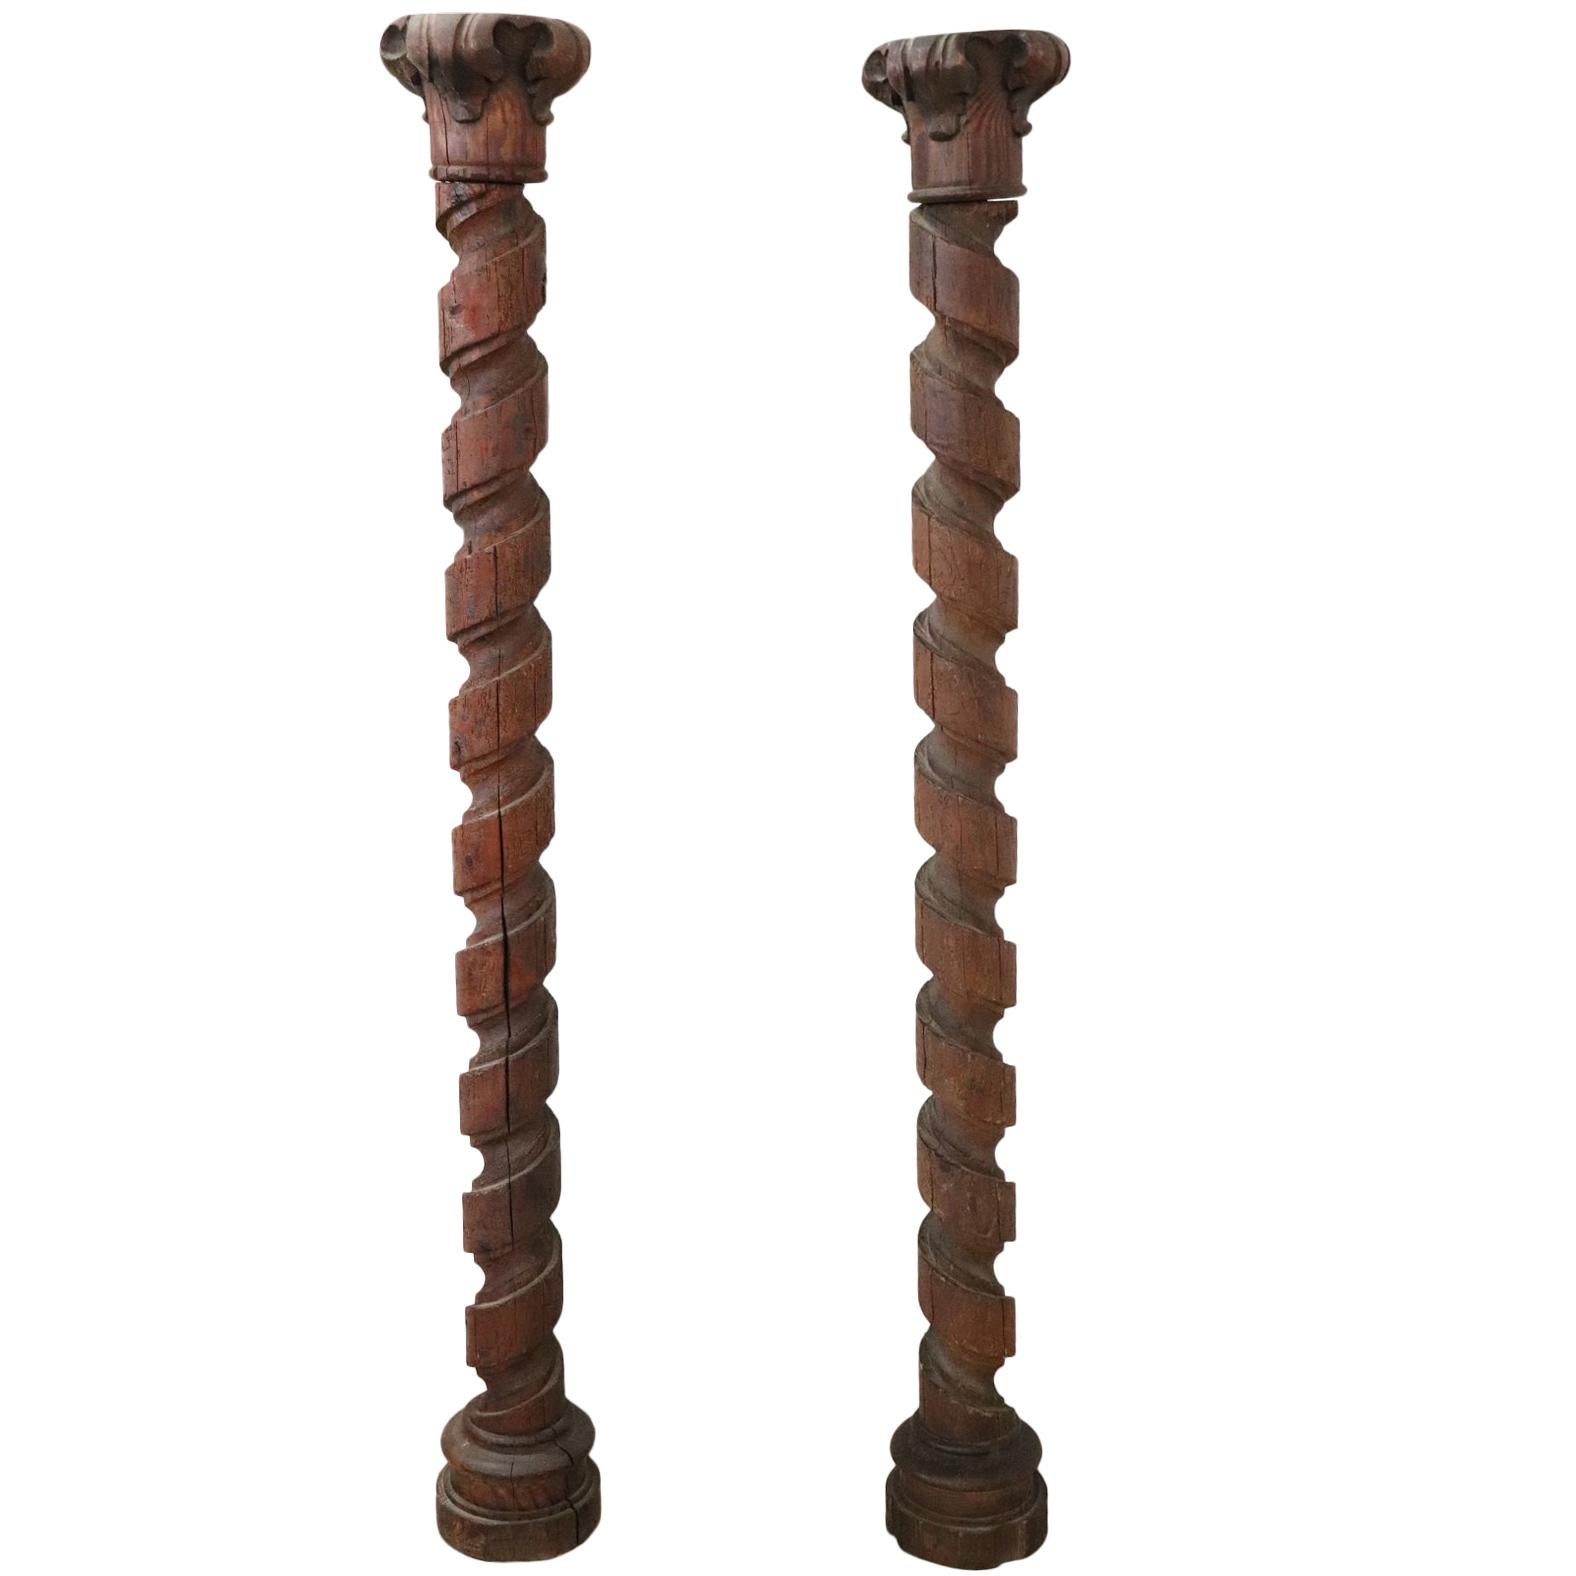 Paar geschnitzte Säulen aus italienischem Firholz aus dem 18. Jahrhundert